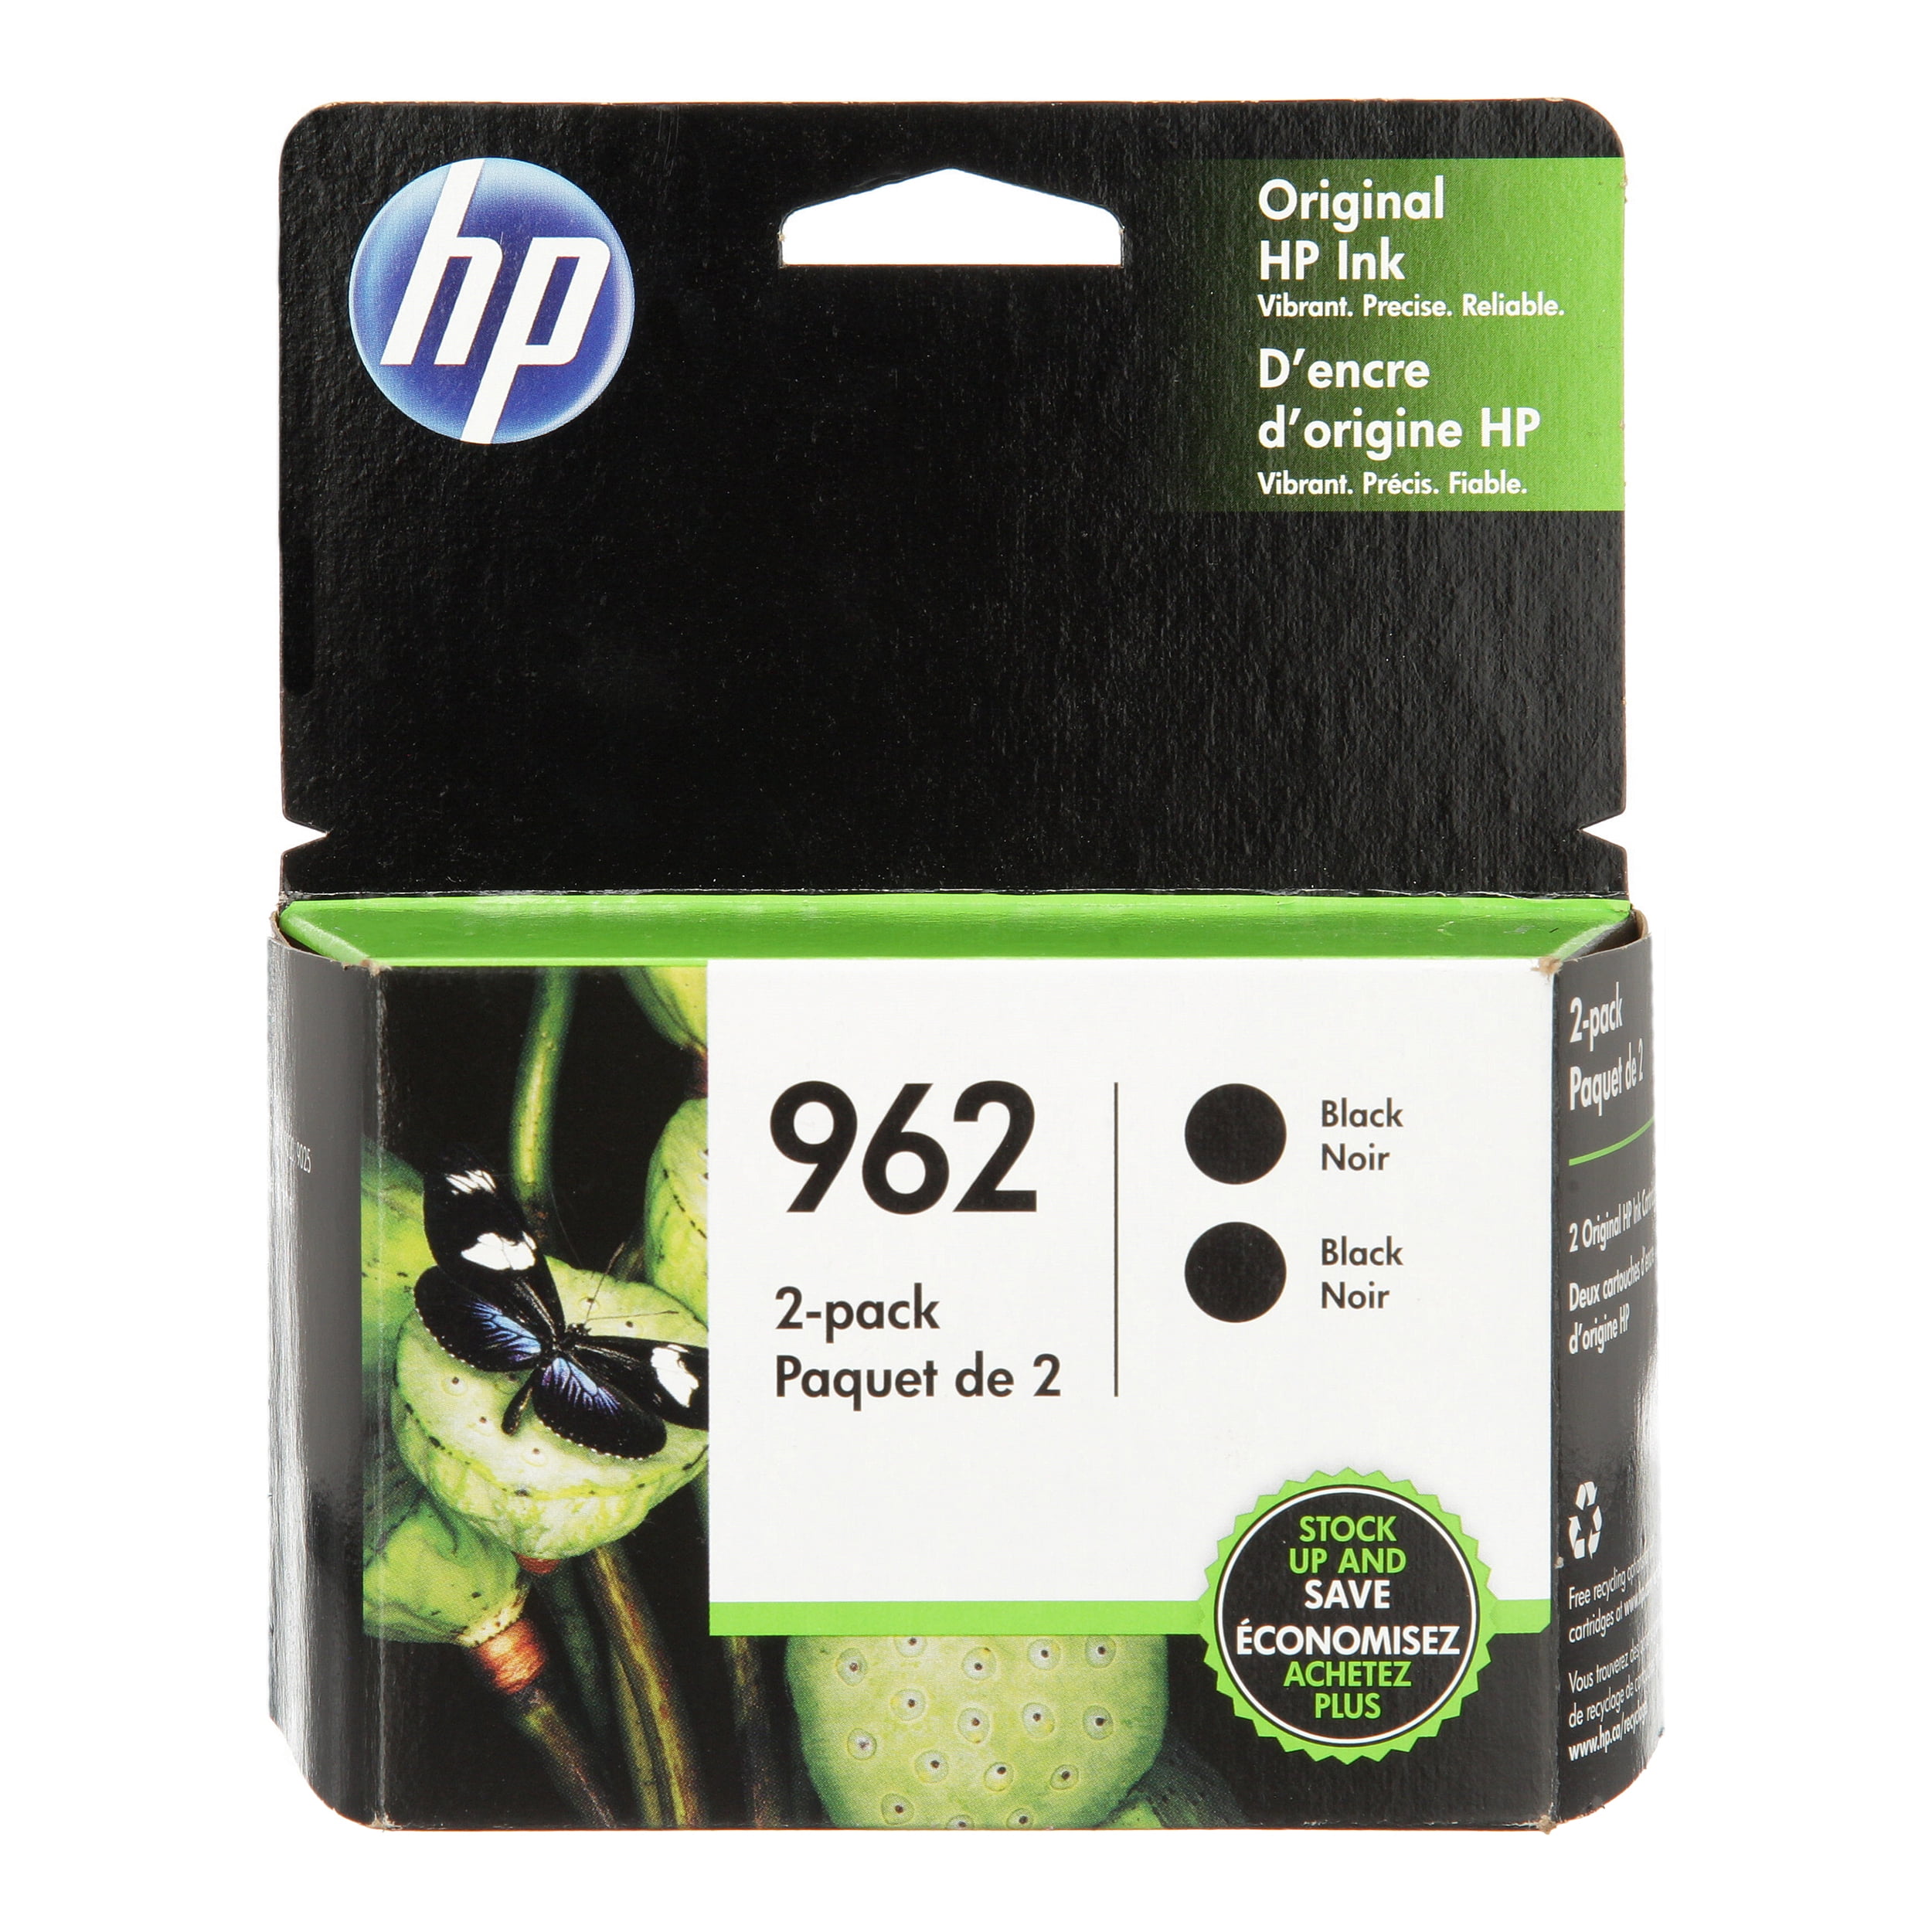 CDS Parts - Genuine HP 3JB16A Printhead w/ 962 963 964 965 Setup Ink  Cartridges